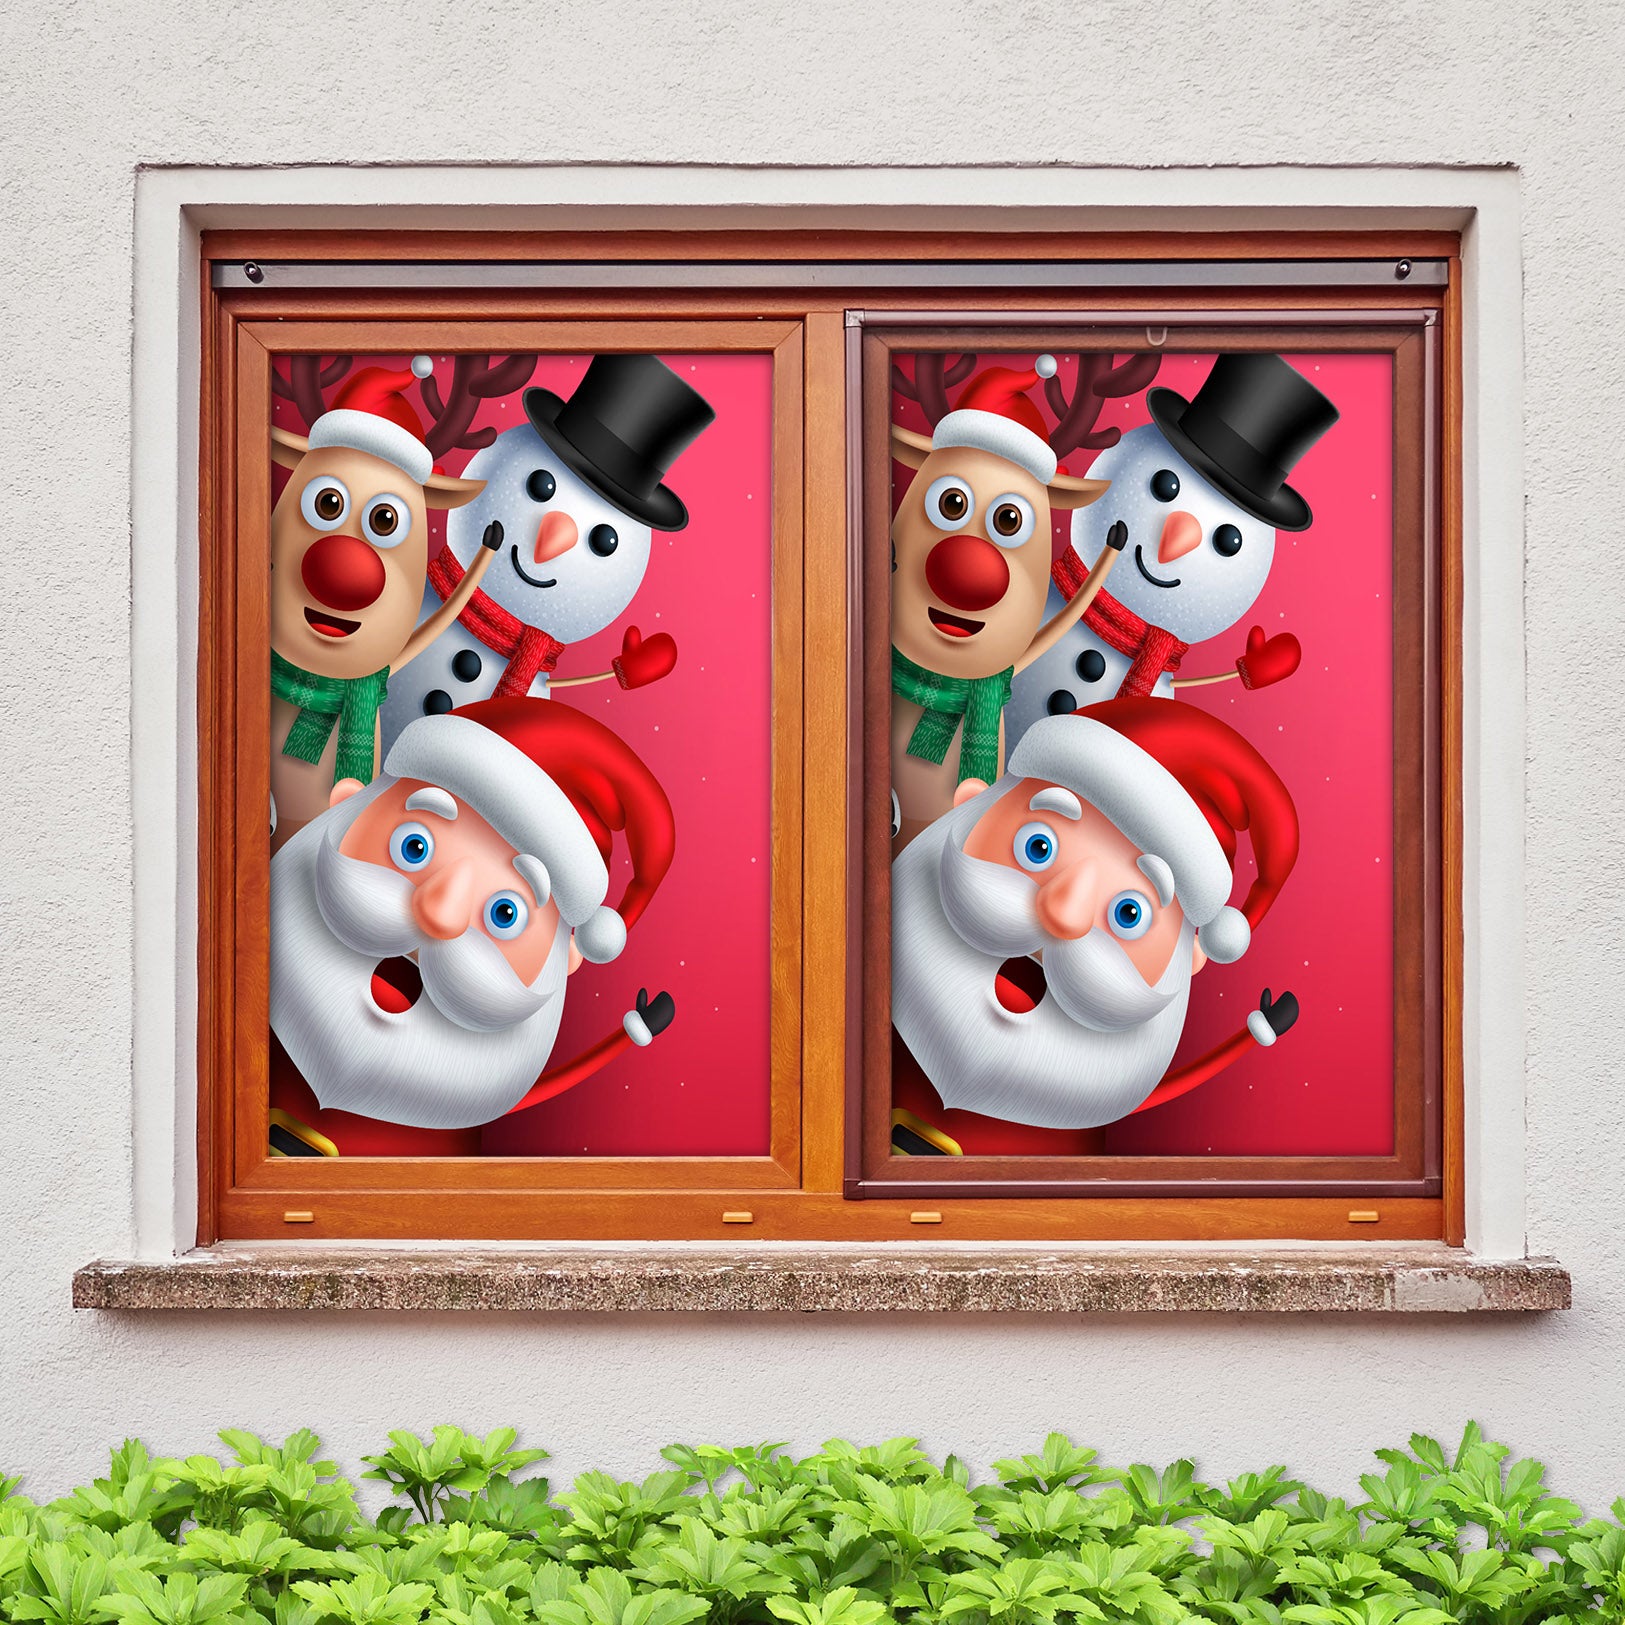 3D Snowman Santa 30063 Christmas Window Film Print Sticker Cling Stained Glass Xmas